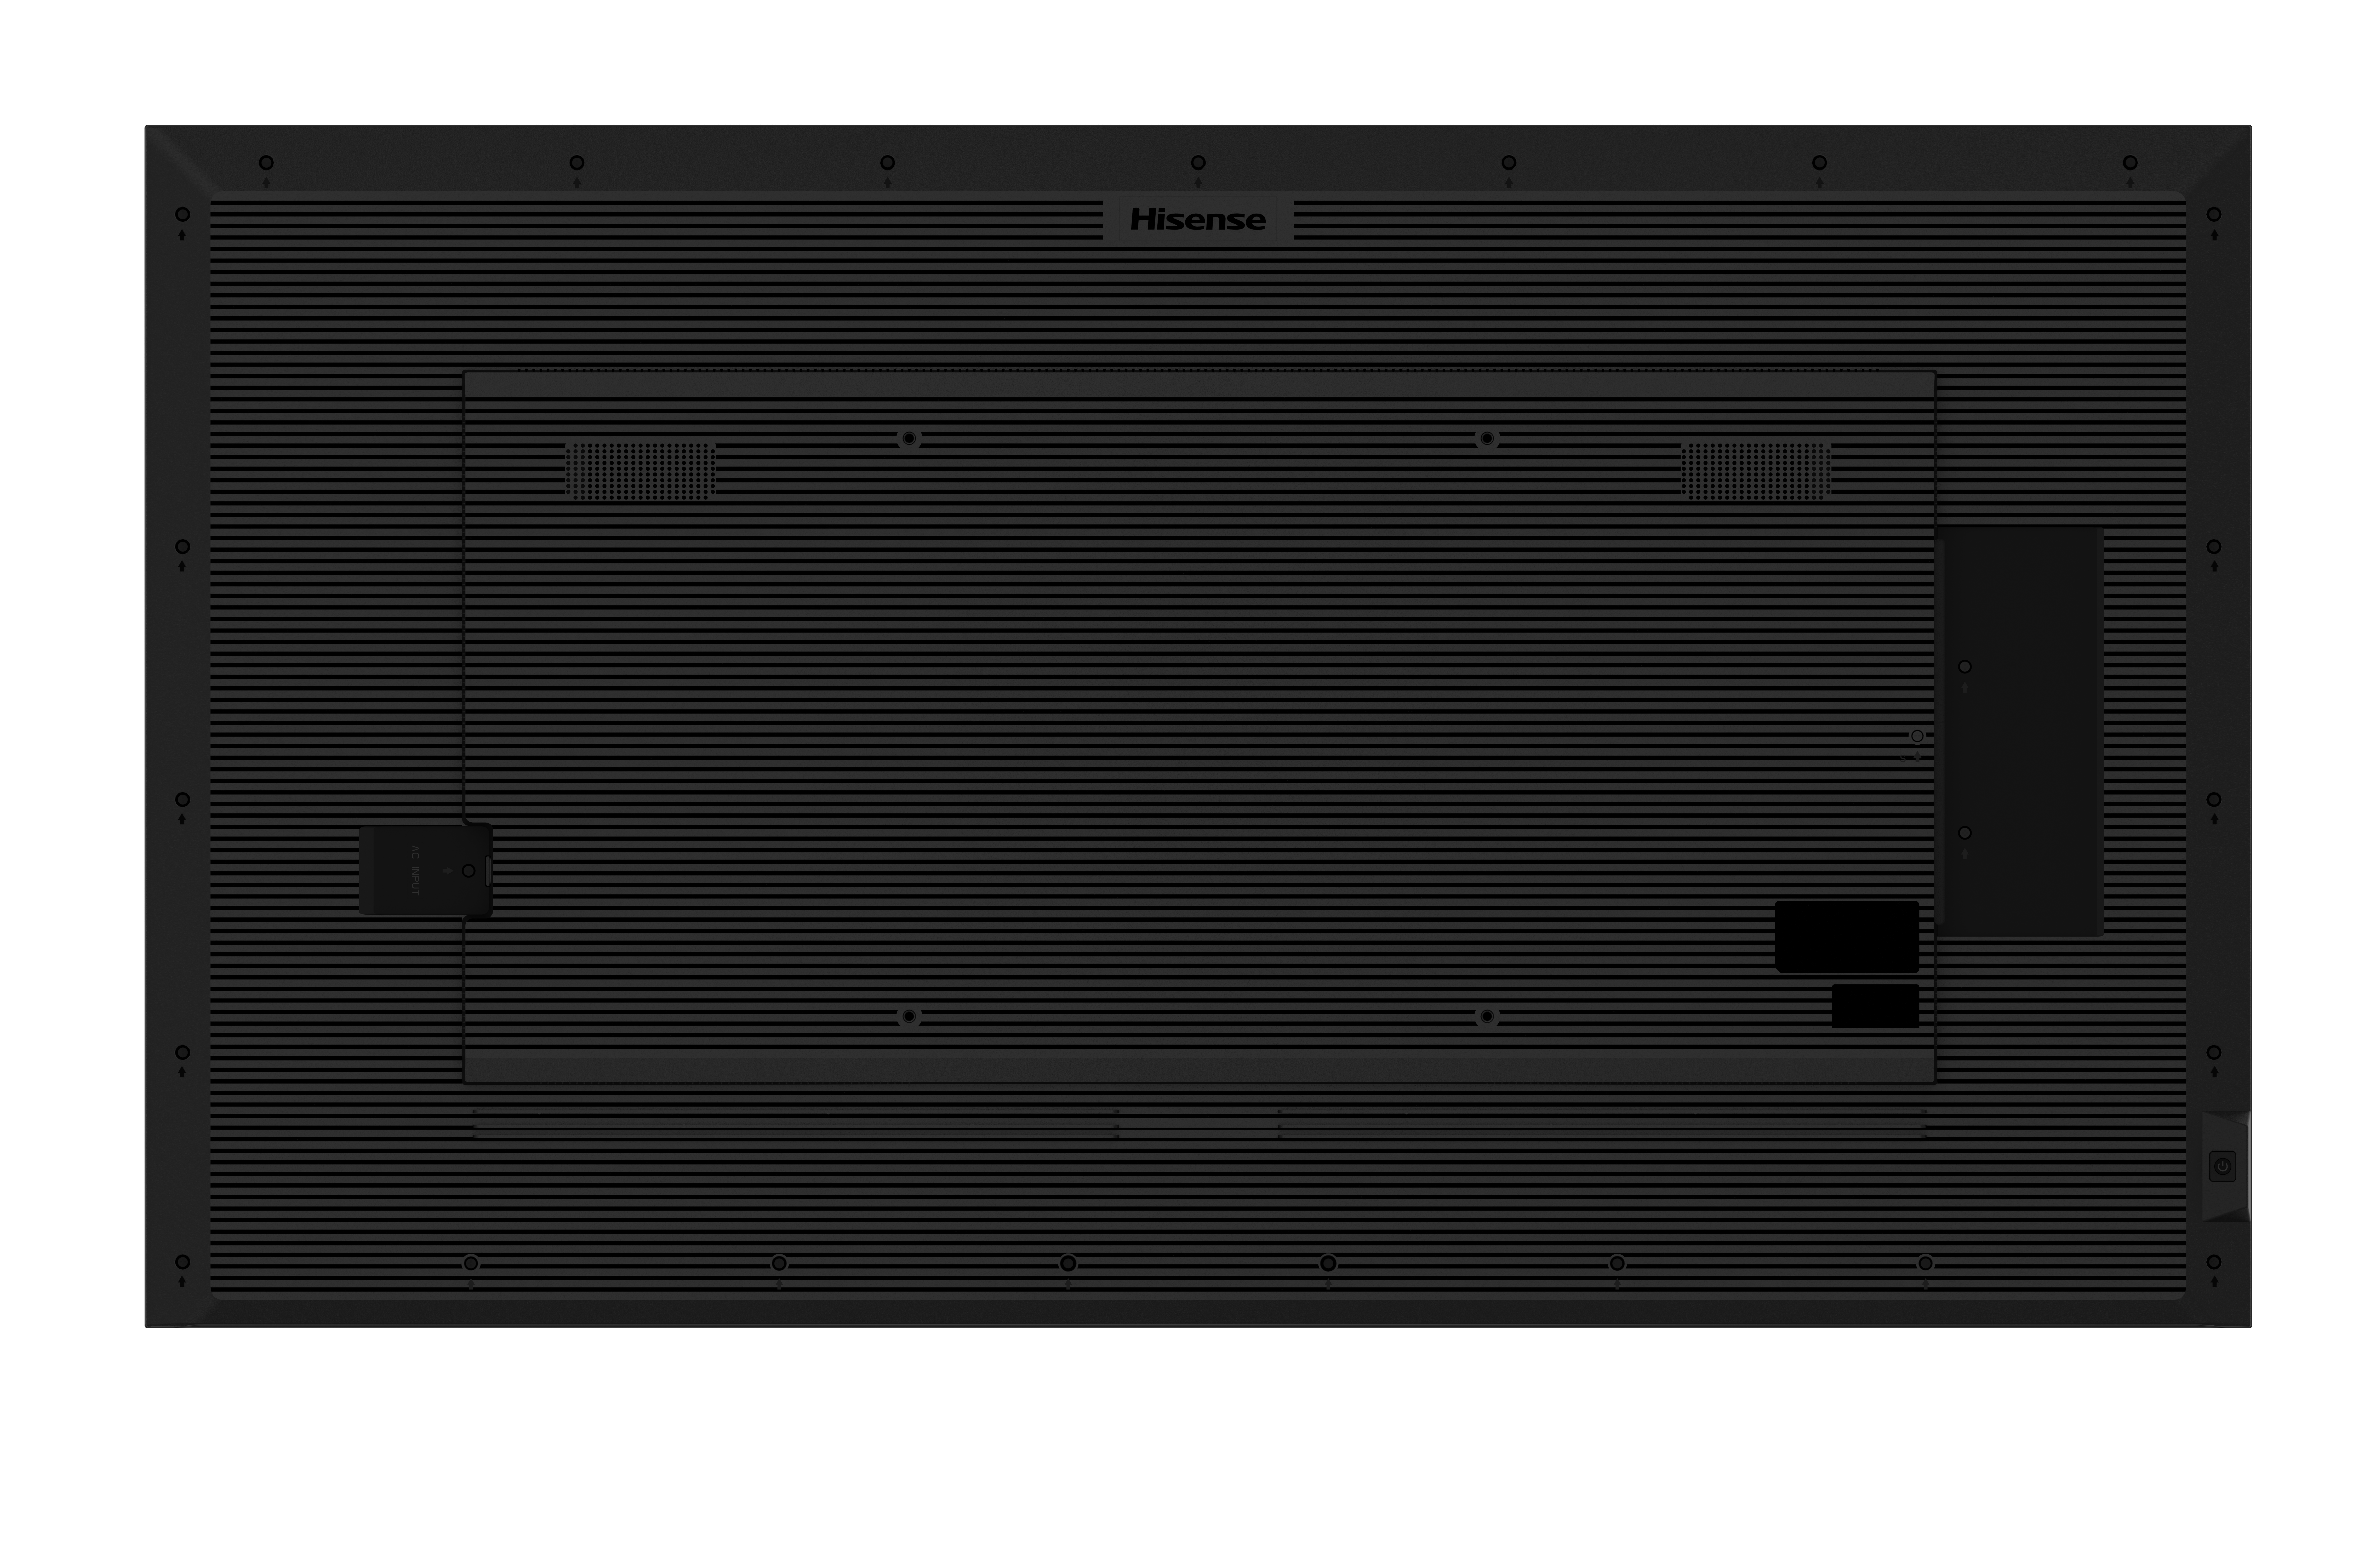 Hisense 65DM66D - 65 inch - 500 cd/m² - Ultra-HD - 3840x2160 pixels - 24/7 - Digital Signage Display